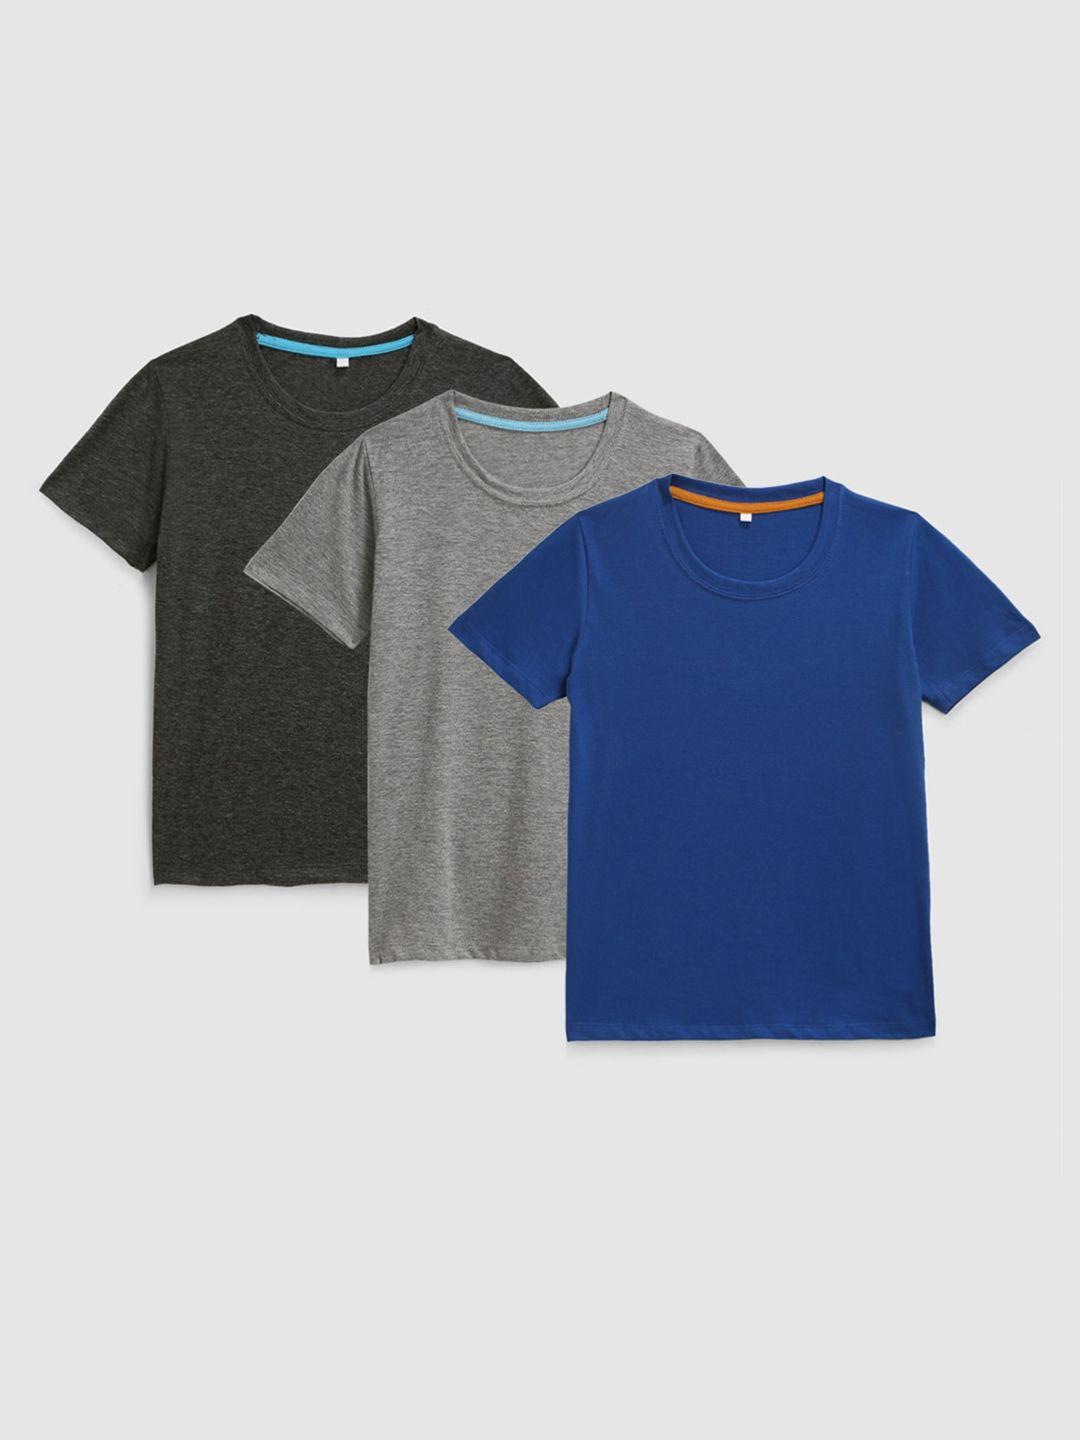 kidscraft boys blue & grey pack of 3 cotton t-shirt